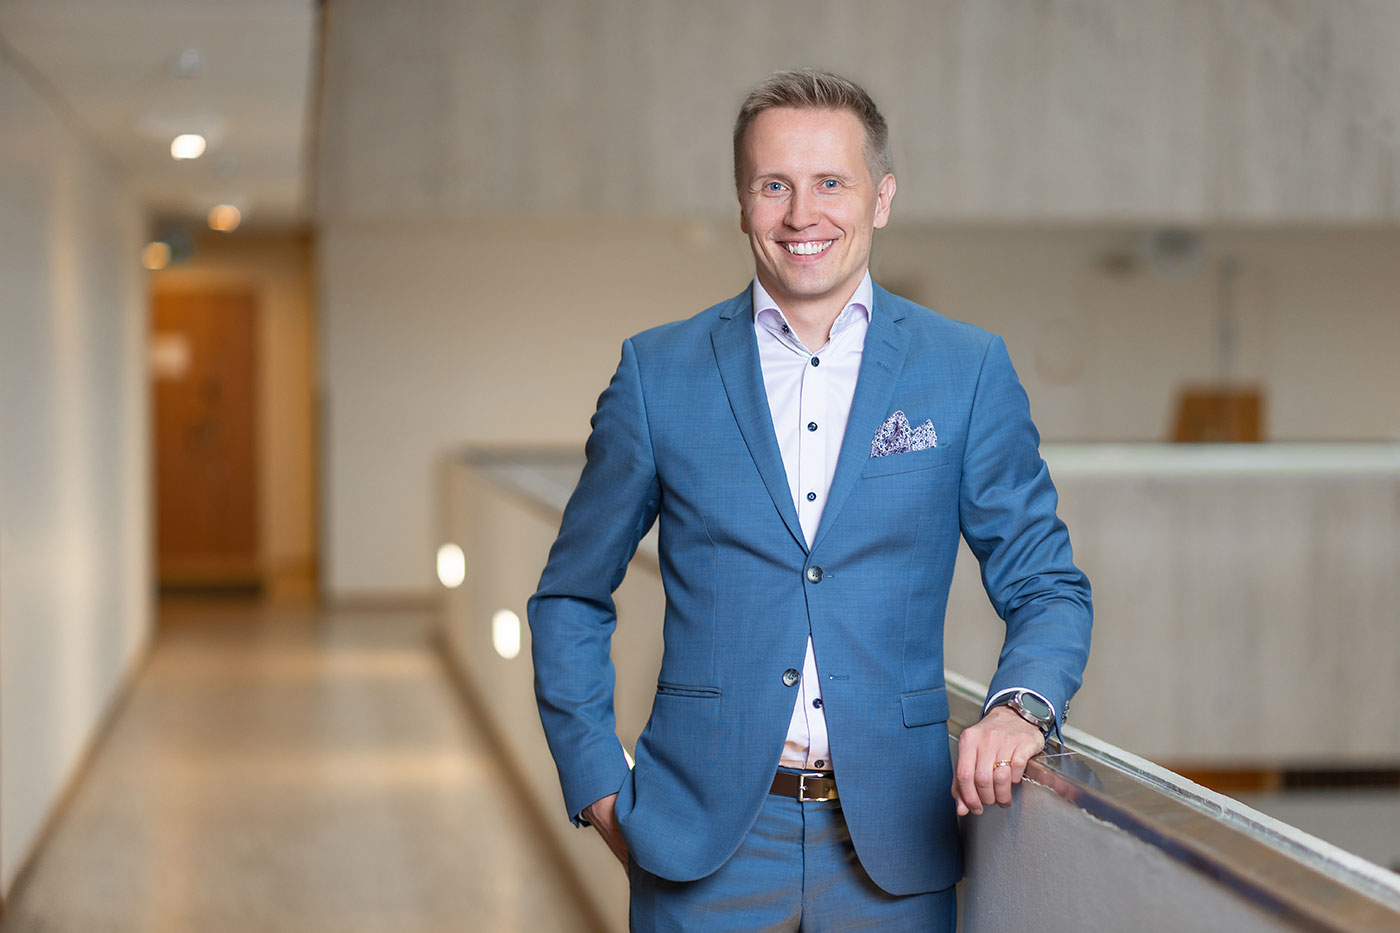 Ari-Pekka Salovaara, Visma's SMB Segment Director, stands in a hallway and smiles at the camera.